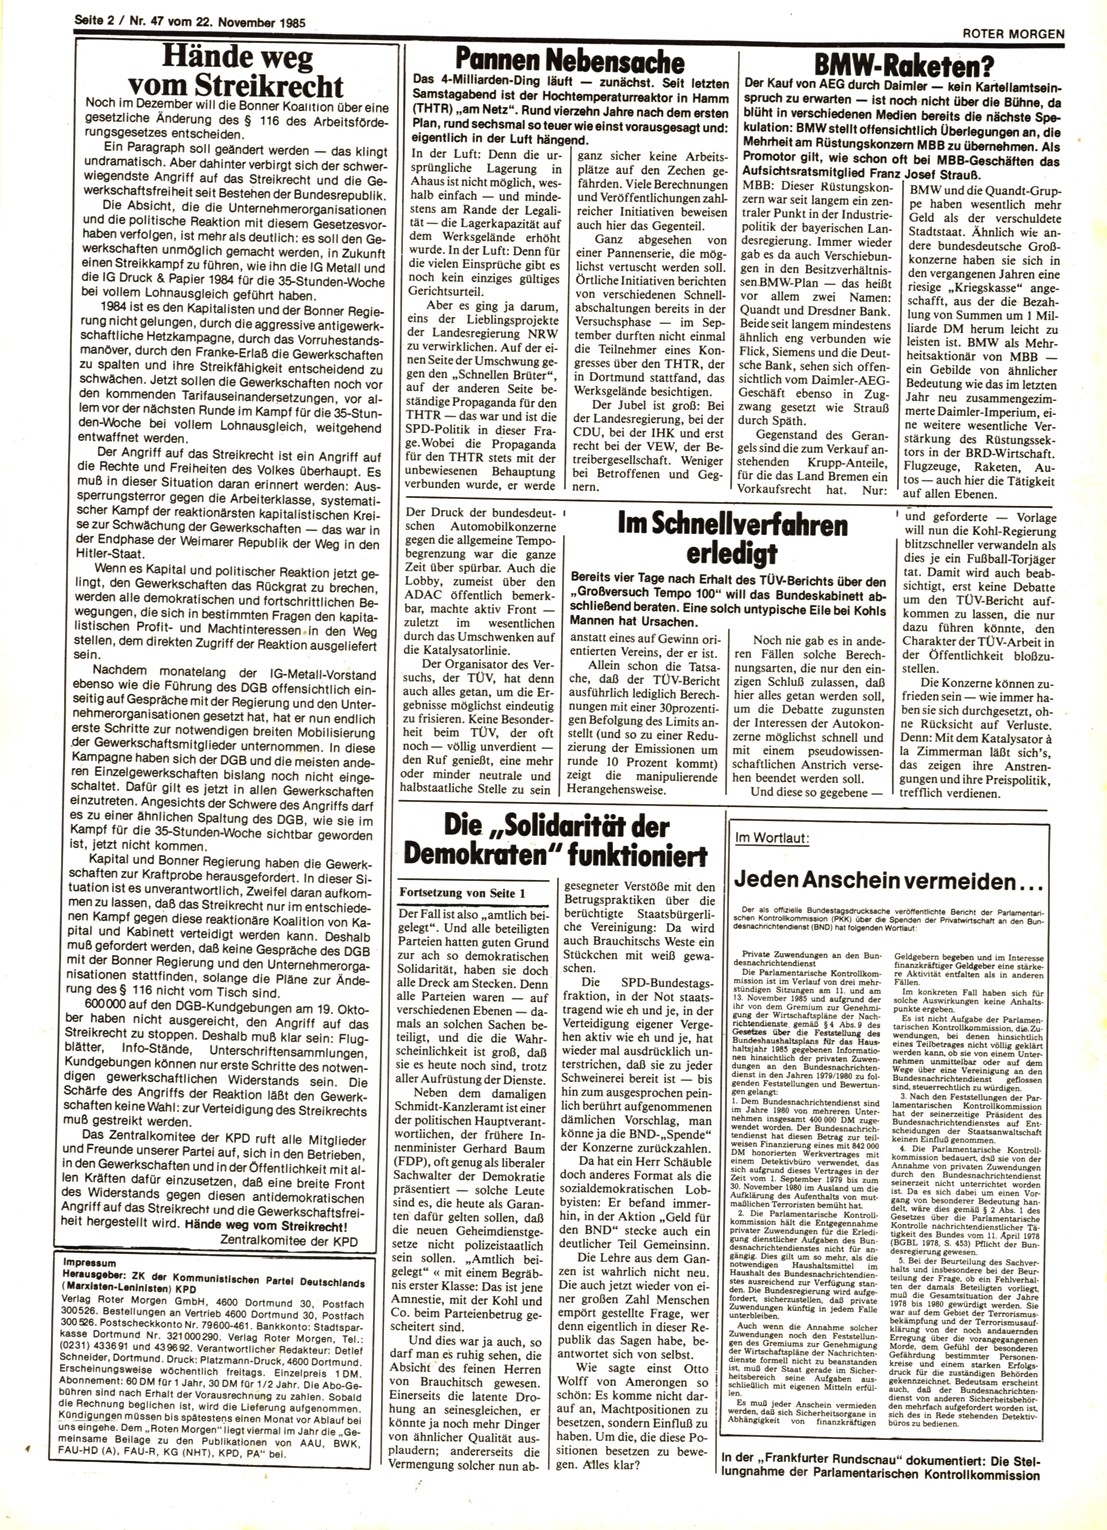 Roter Morgen, 19. Jg., 22. November 1985, Nr. 47, Seite 2